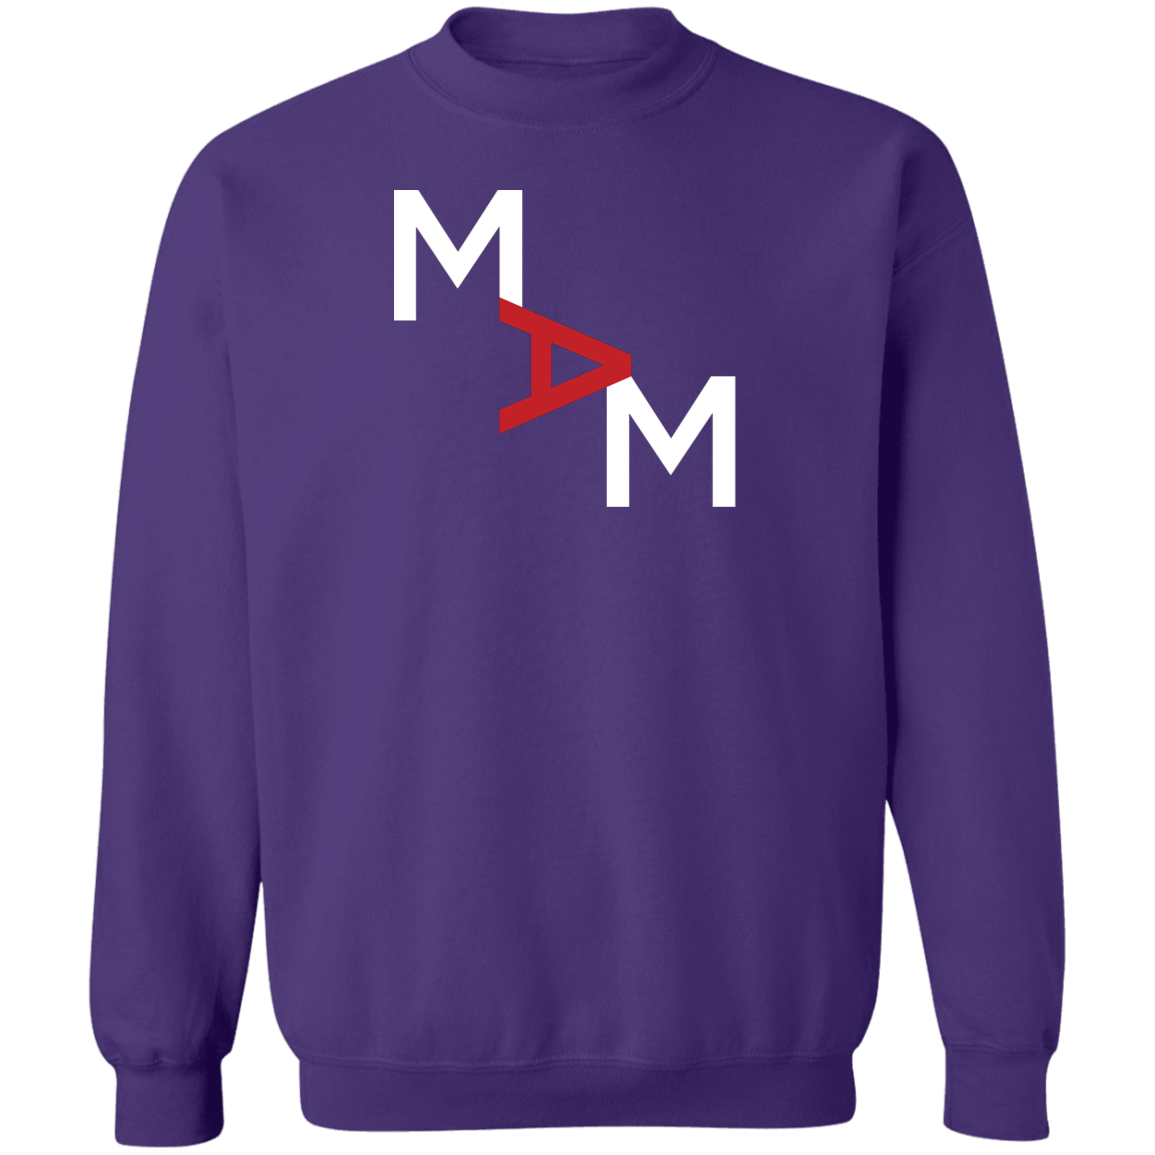 MAM Crewneck Sweatshirt (big logo)